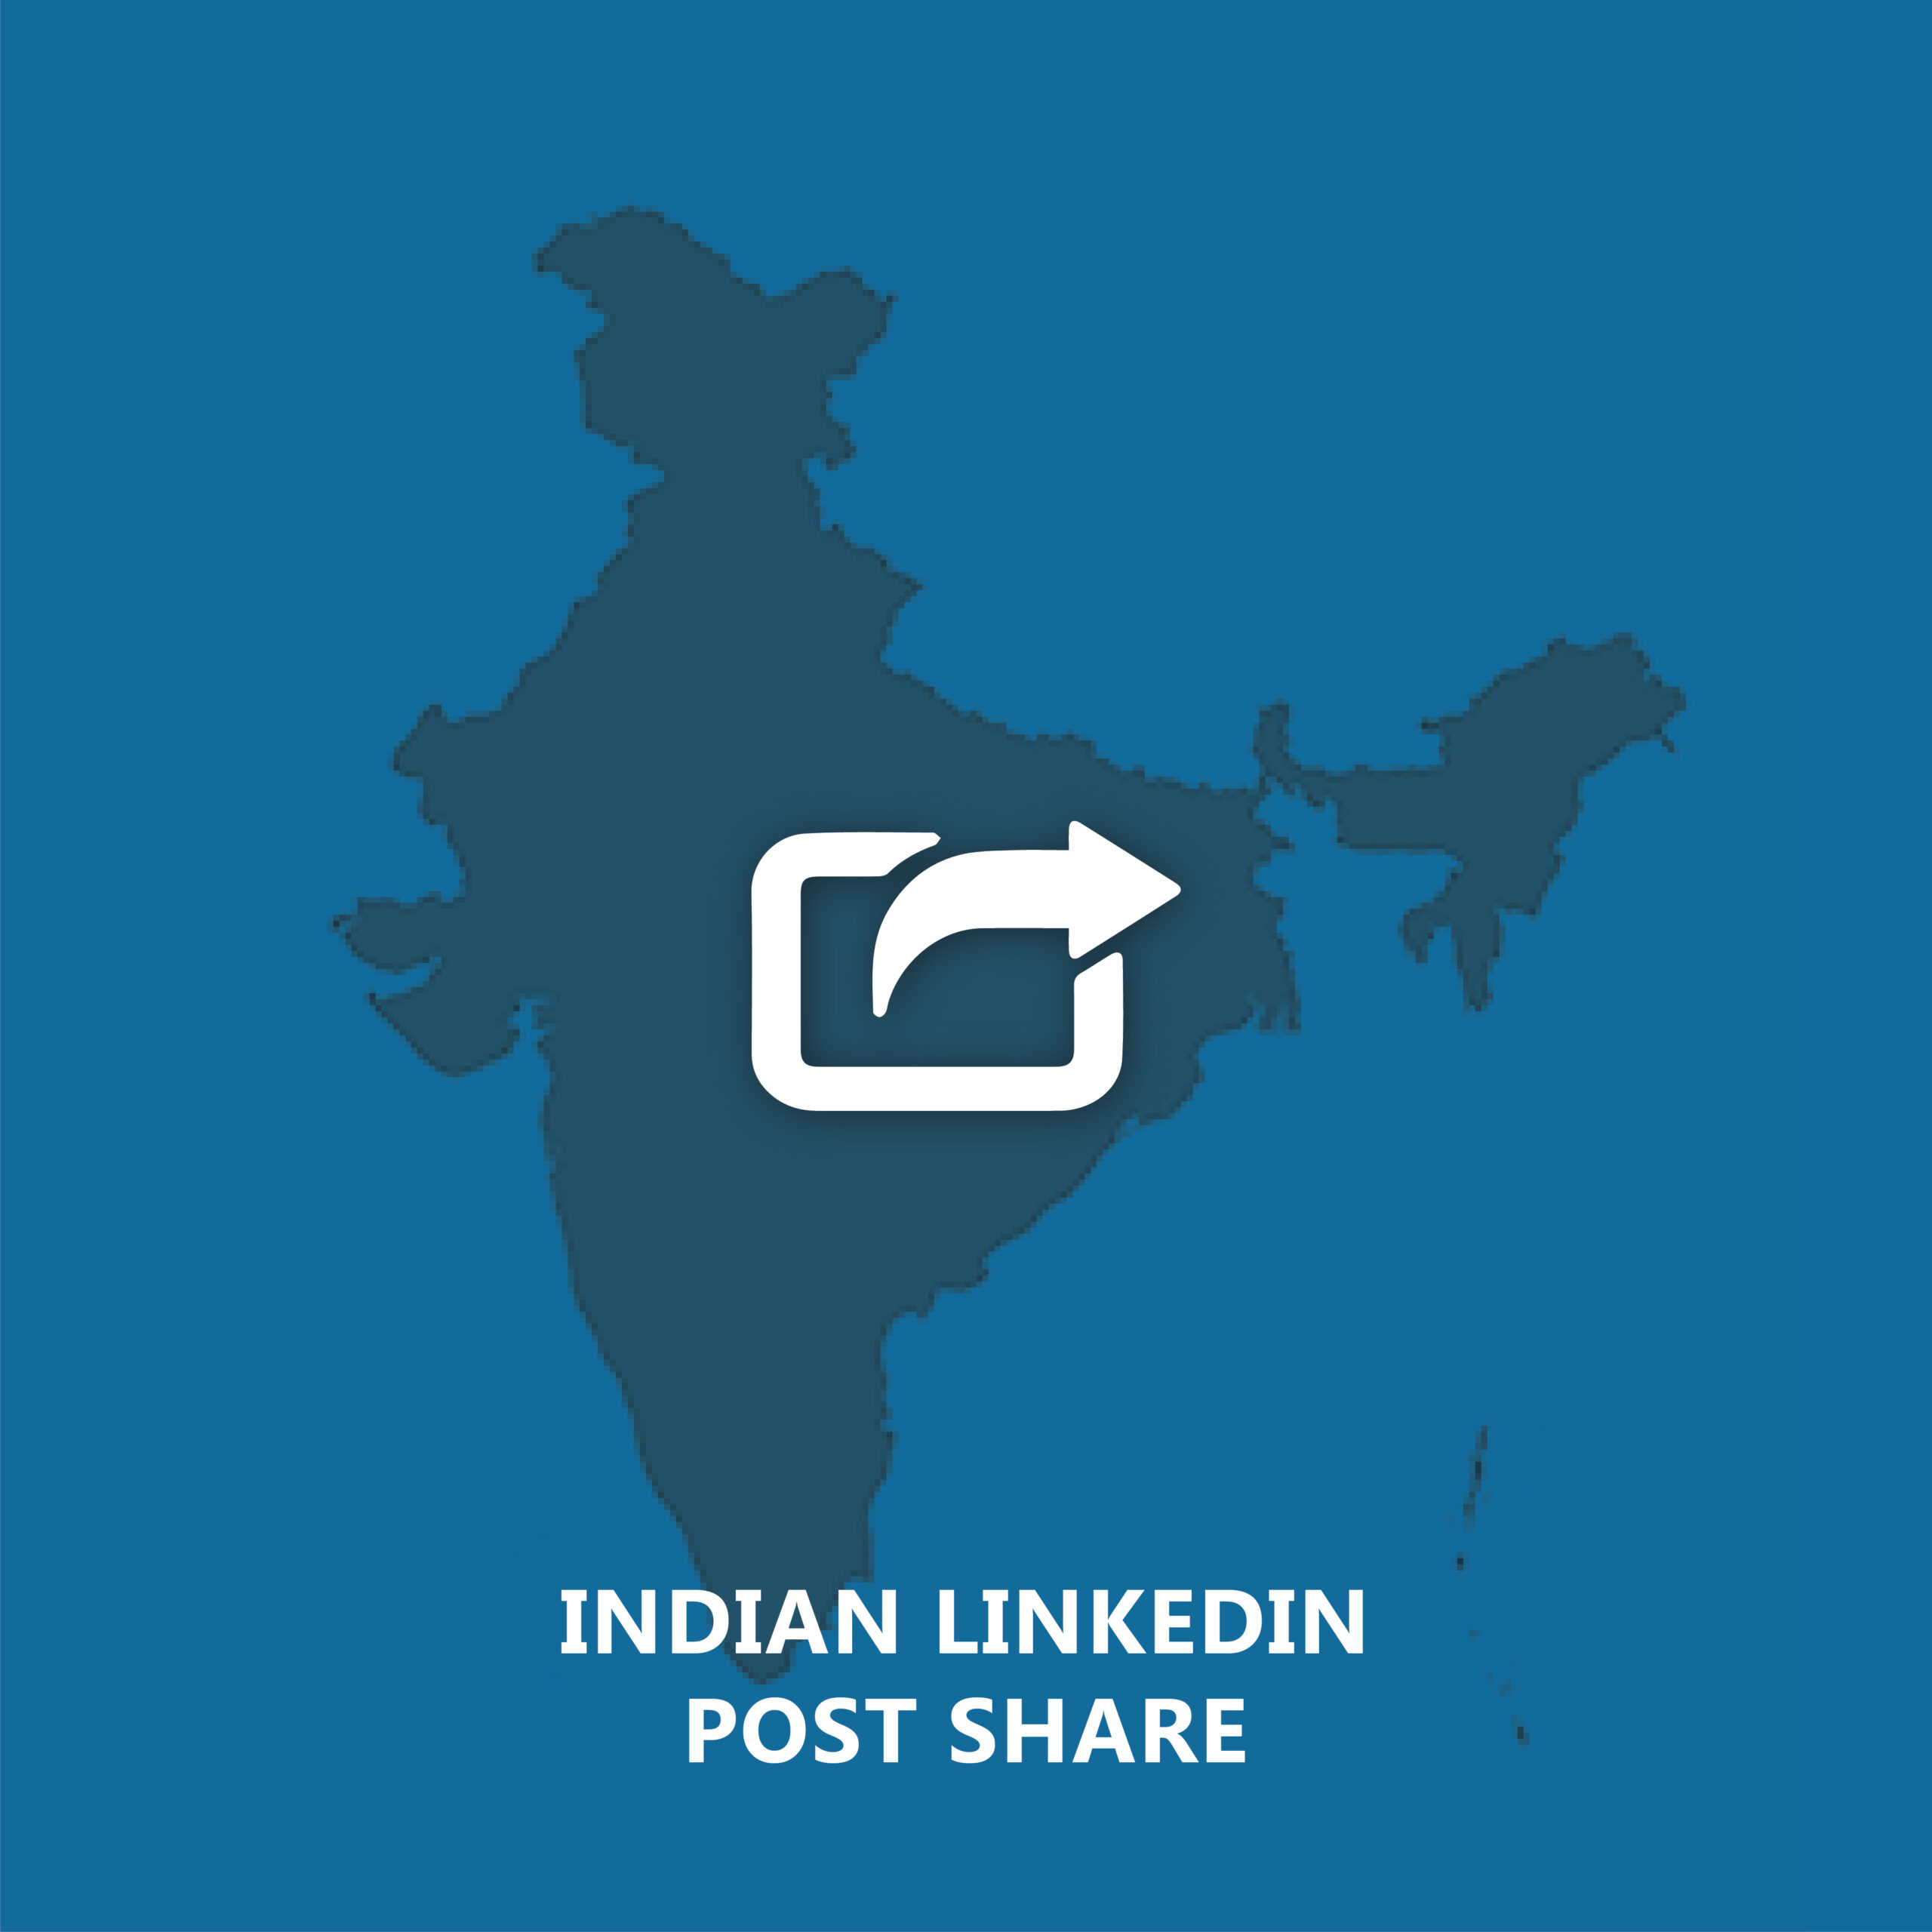 Indian LinkedIn Post Share